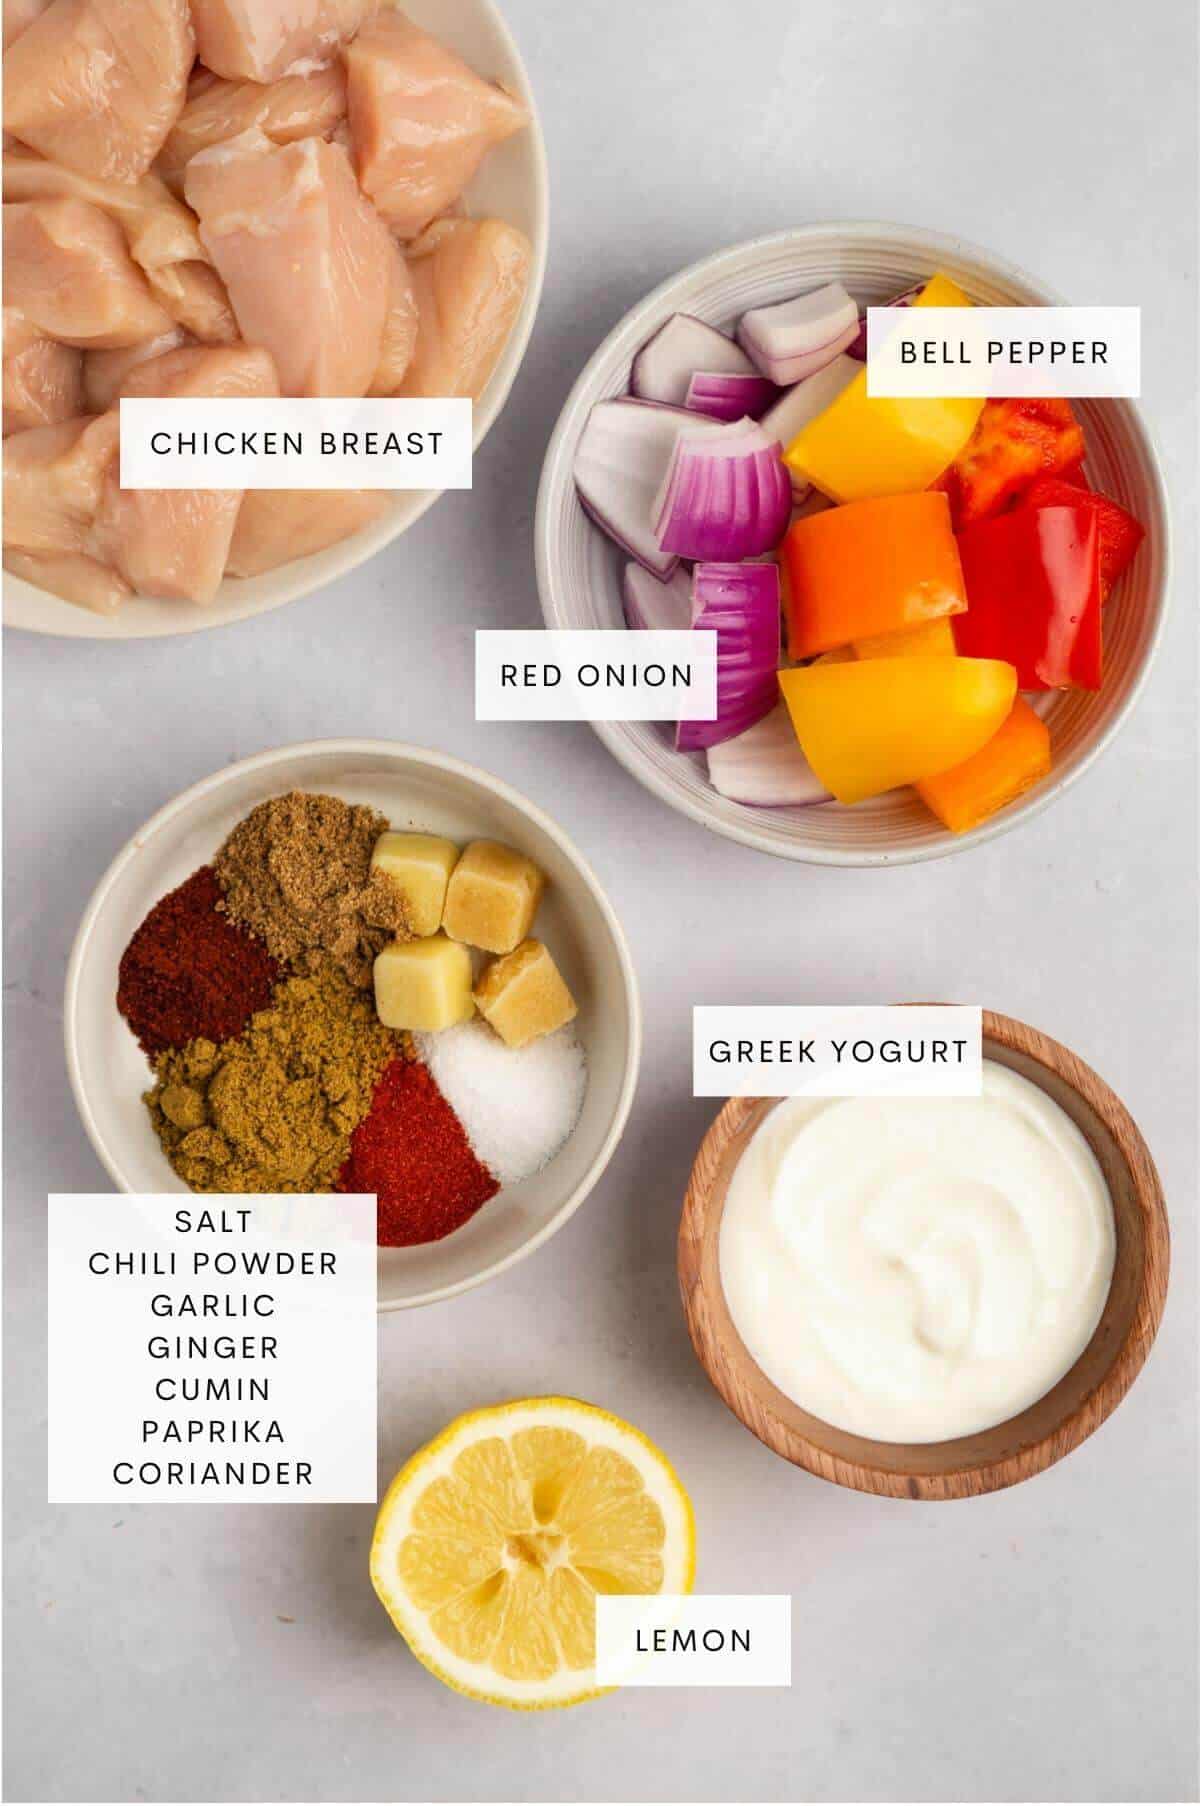 Ingredients needed for Tandoori chicken kebabs: chicken breast, bell peppers, red onion, Greek yogurt, lemon, ginger, garlic, and spices.